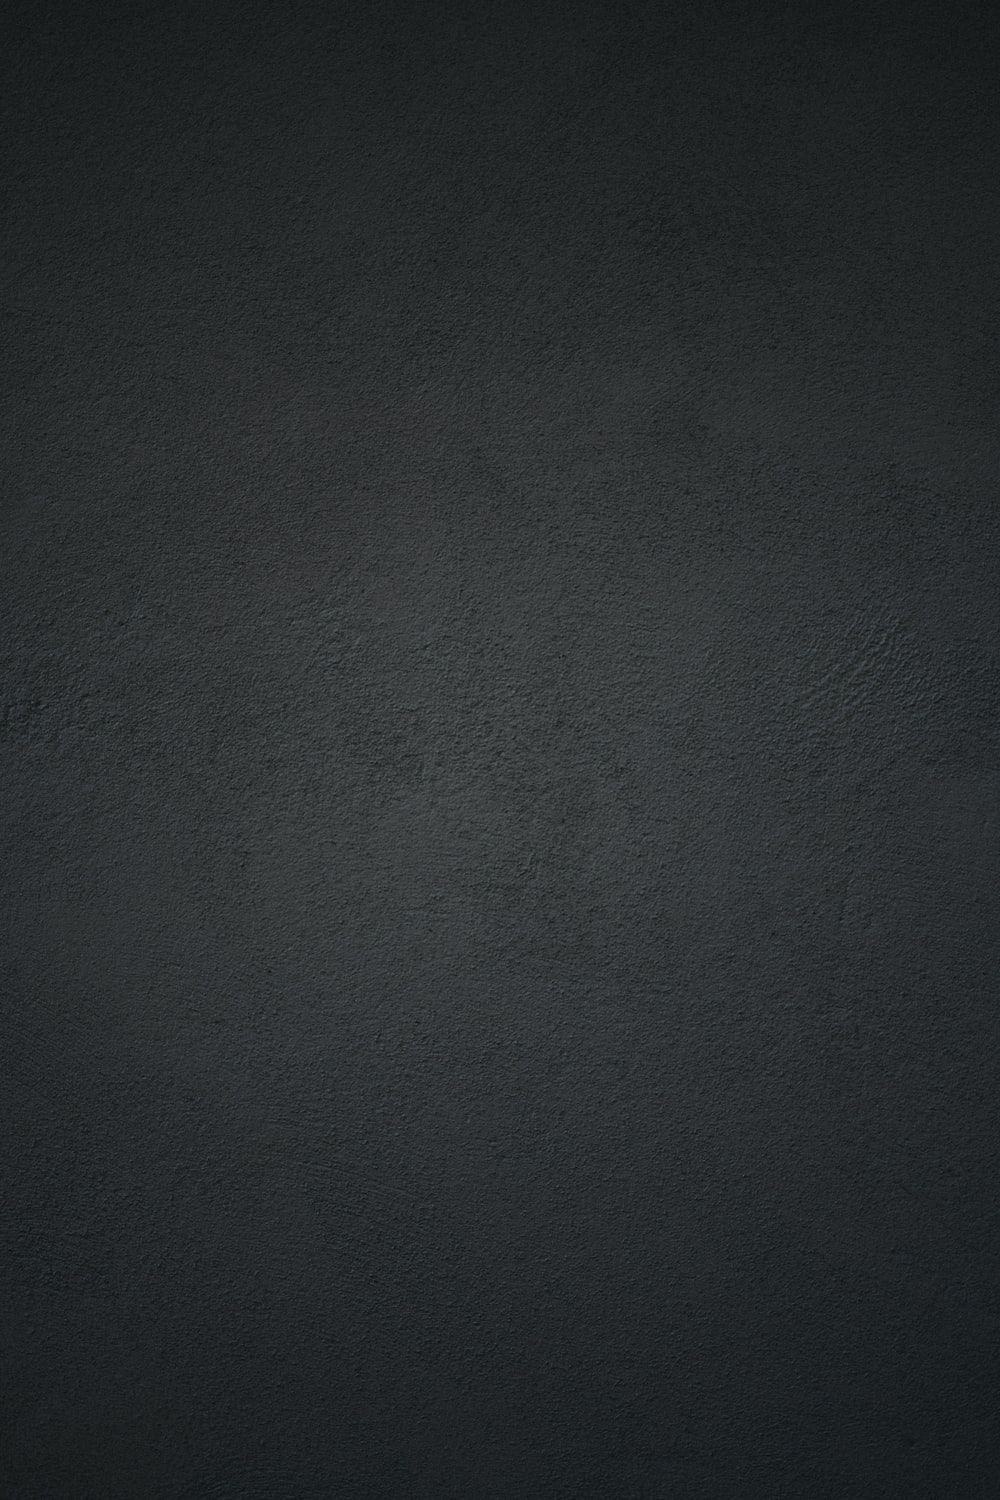 Textured Wallpaper: Free HD Download [HQ]